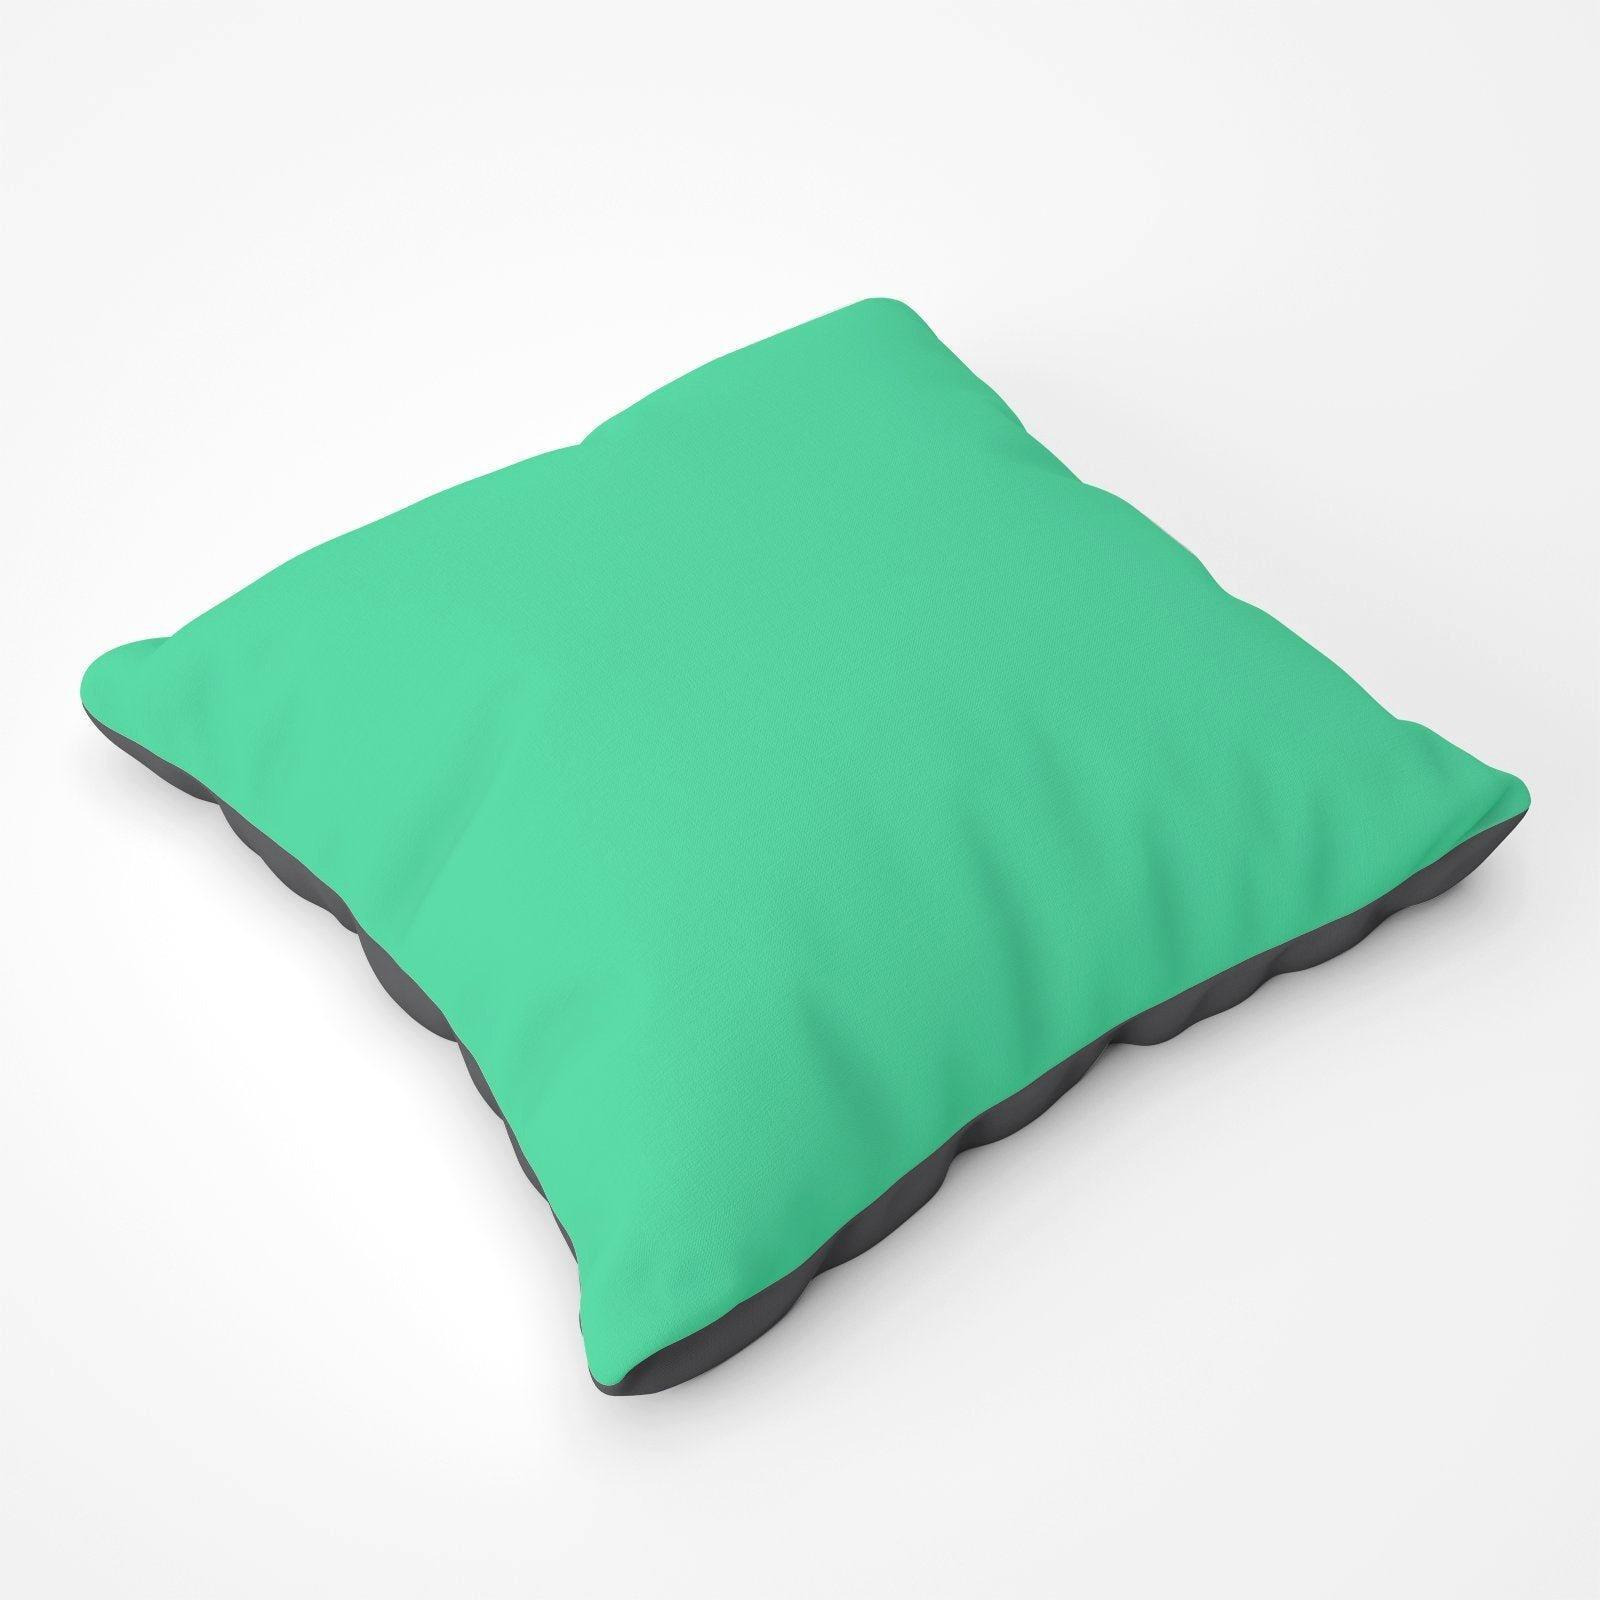 Teal Blue Floor Cushion - image 1